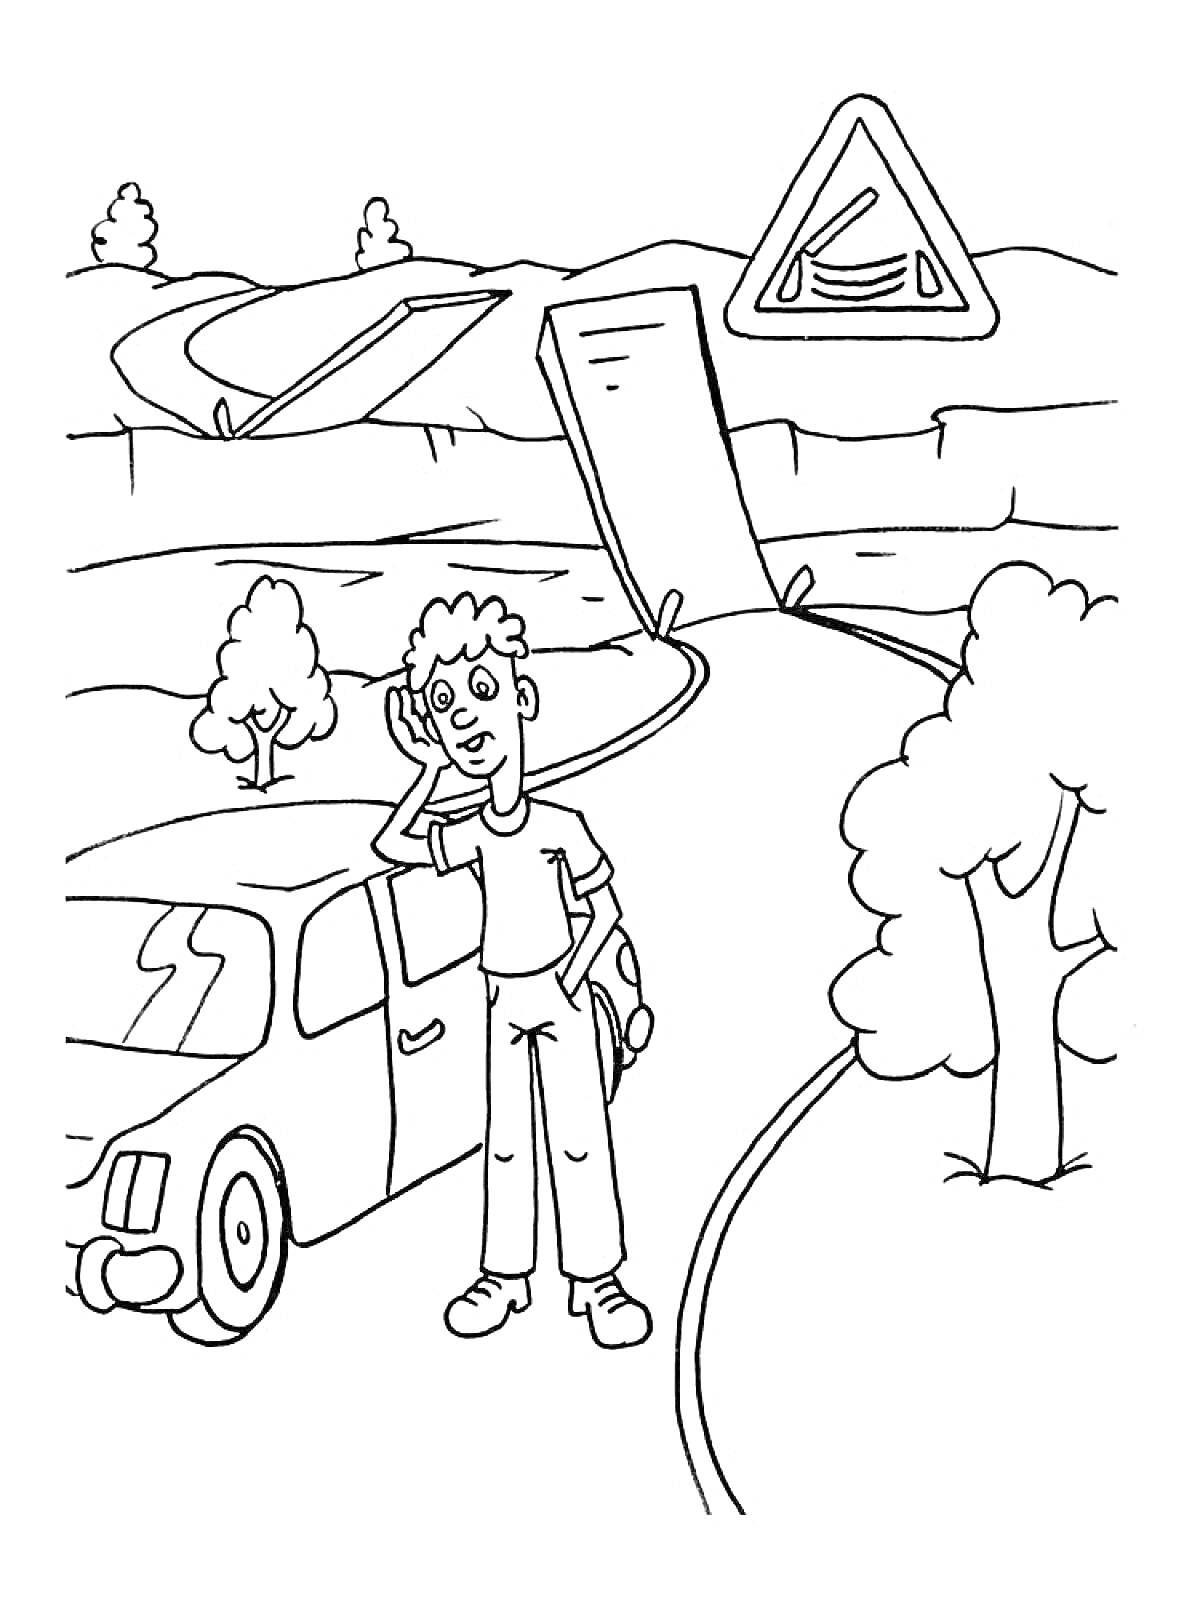 Раскраска Мужчина возле легкового автомобиля у дорожного знака вблизи опасного поворота